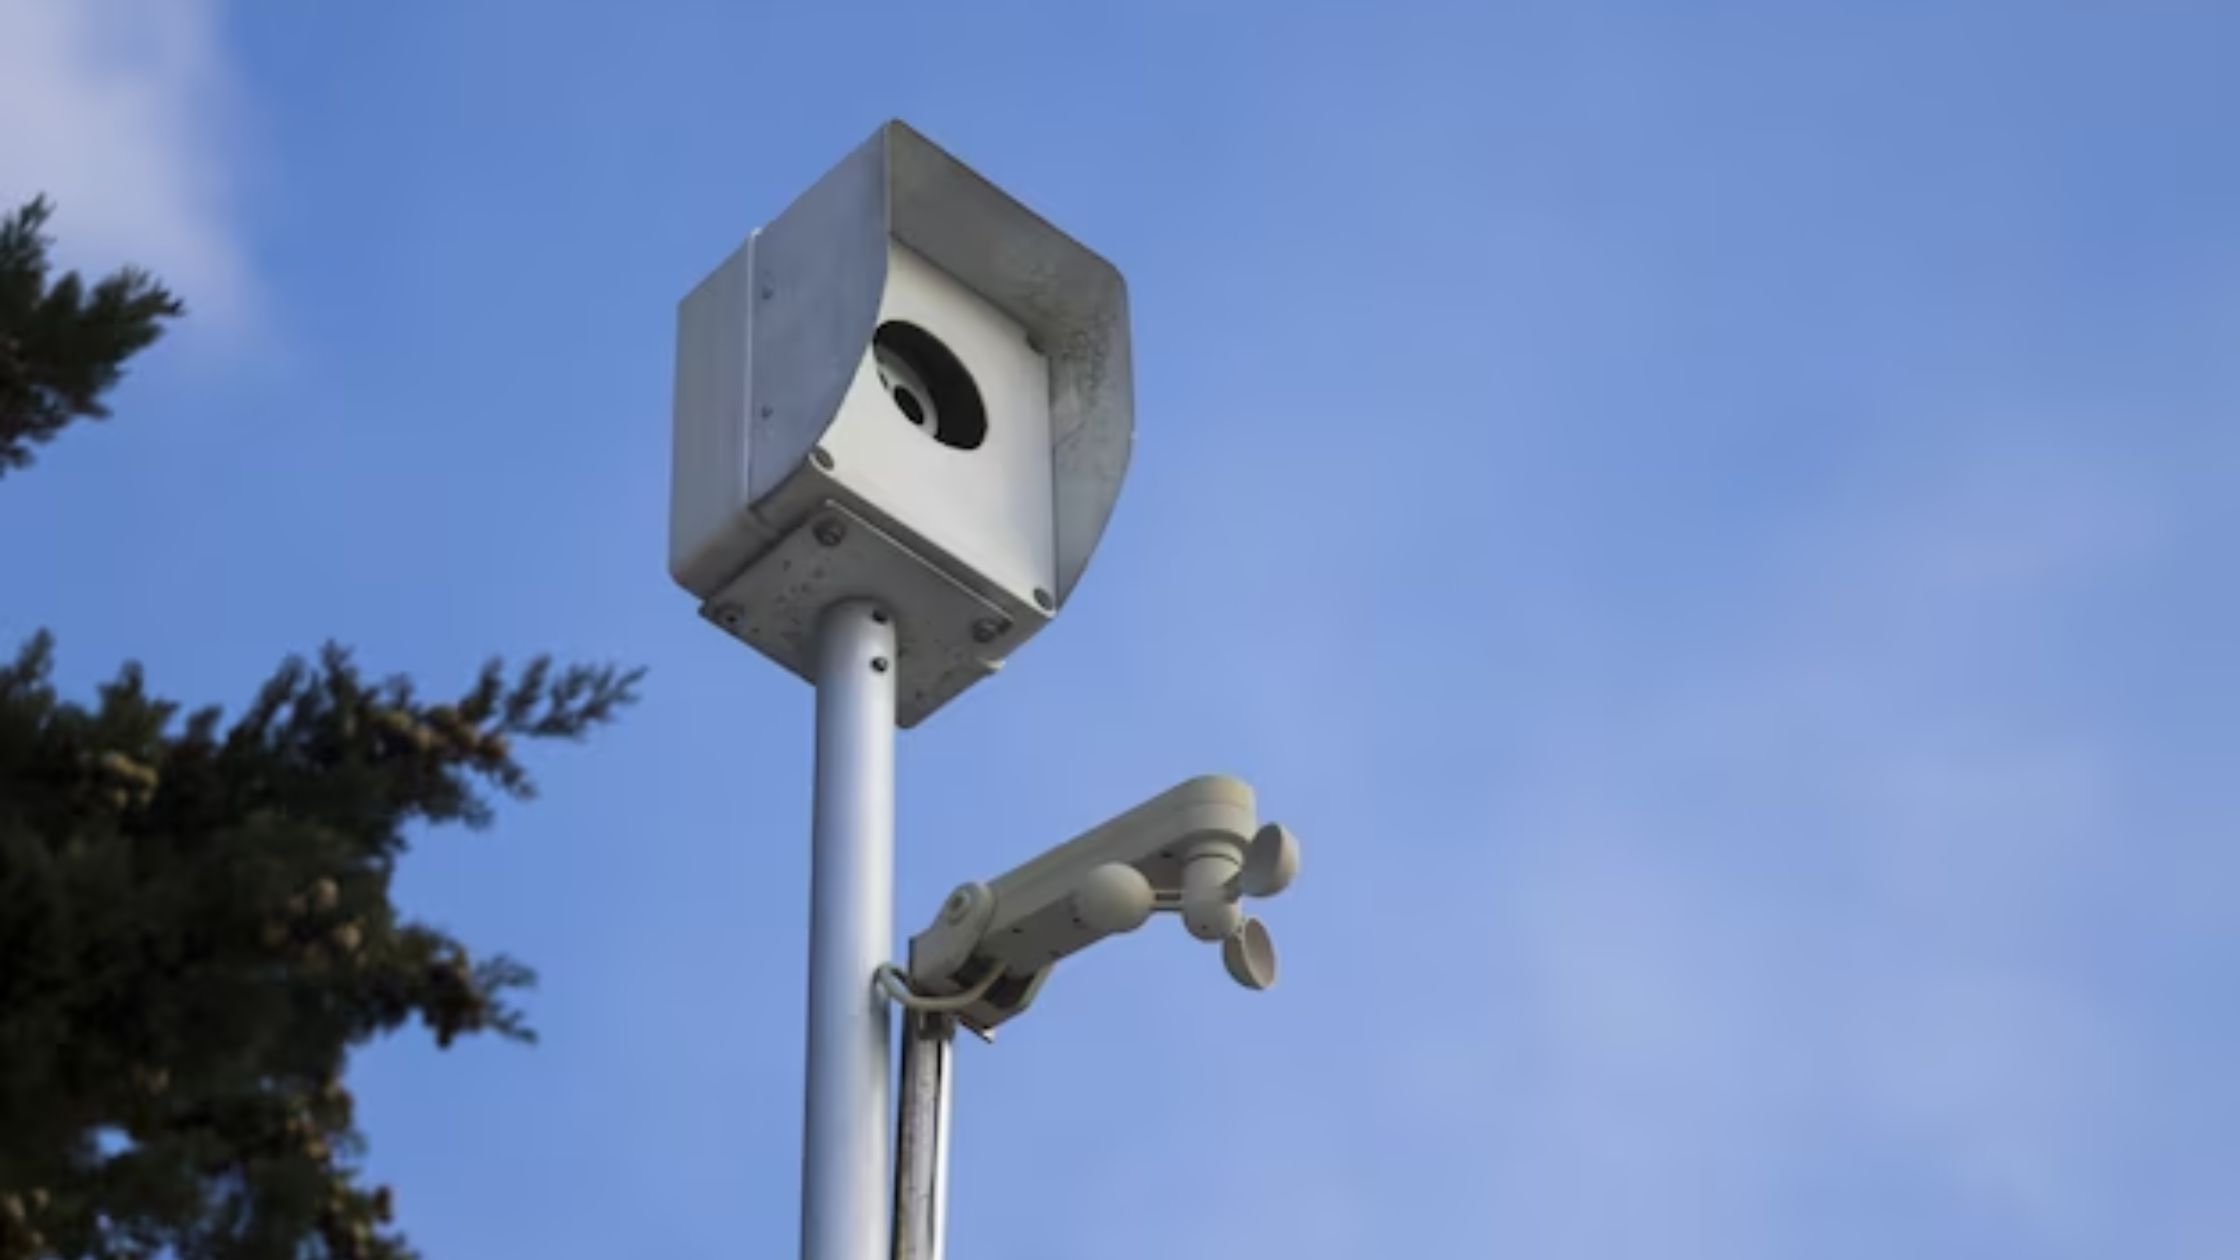 right CCTV installation service provider in Brisbane